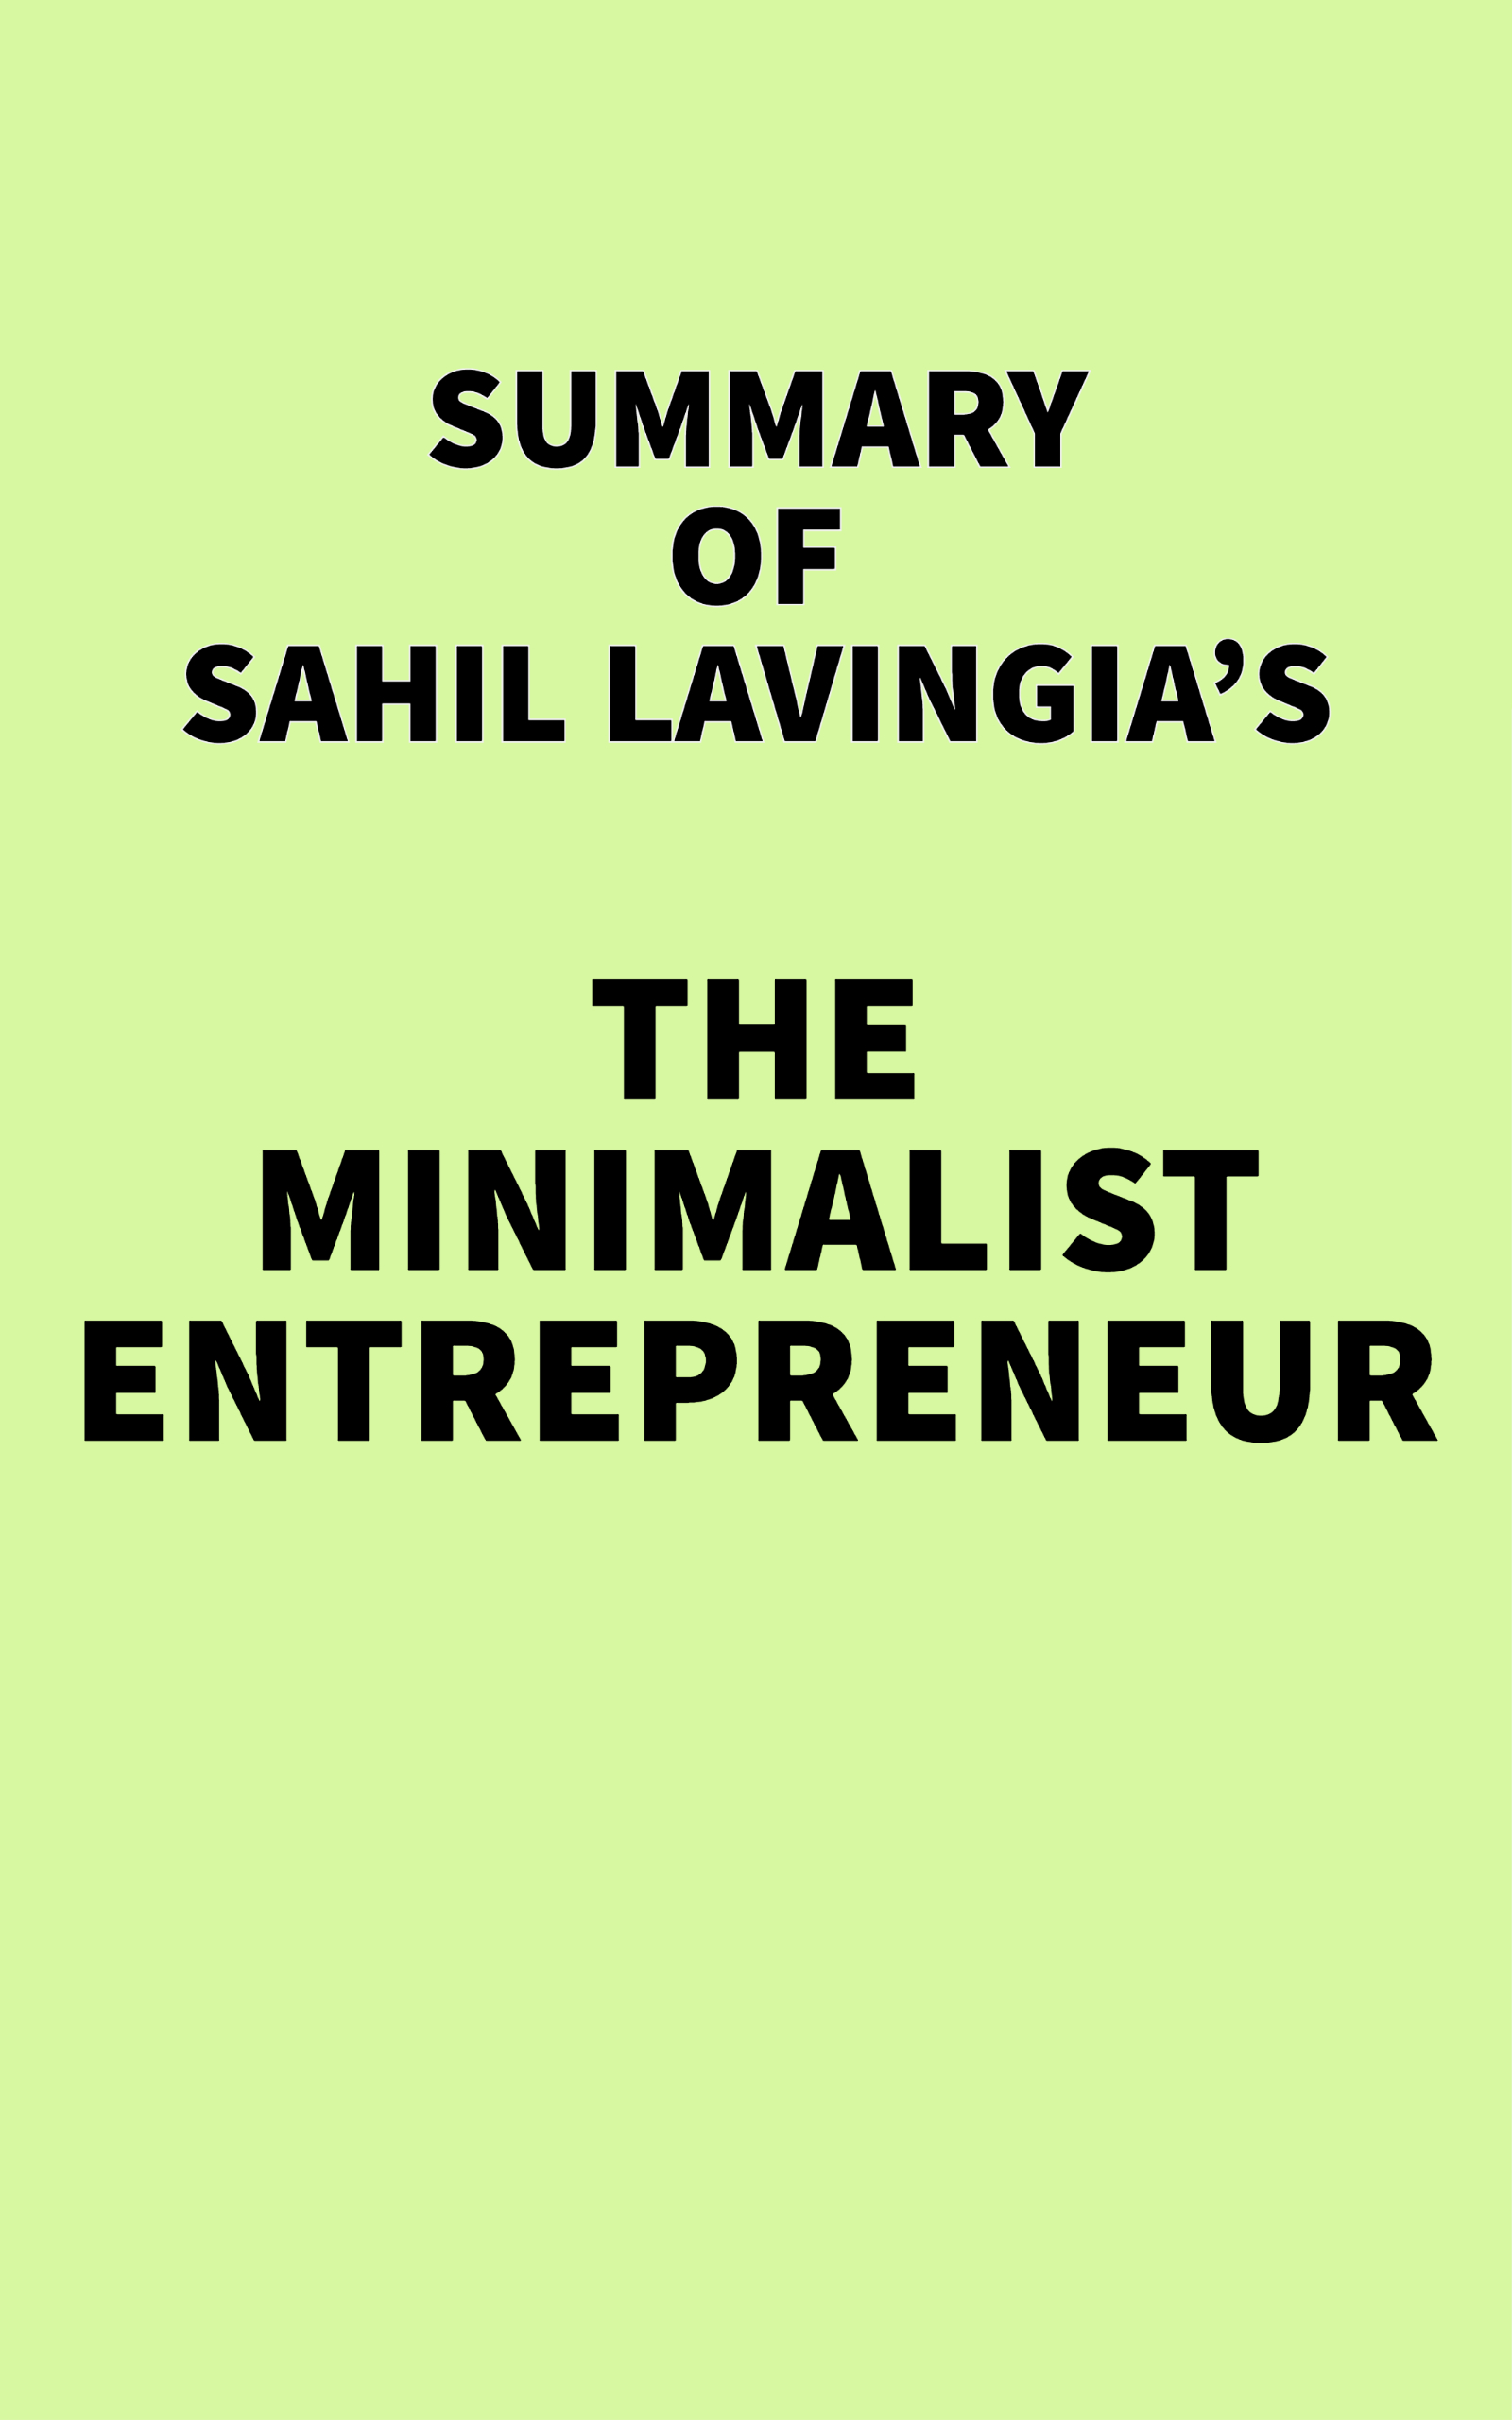 Summary of Sahil Lavingia's The Minimalist Entrepreneur